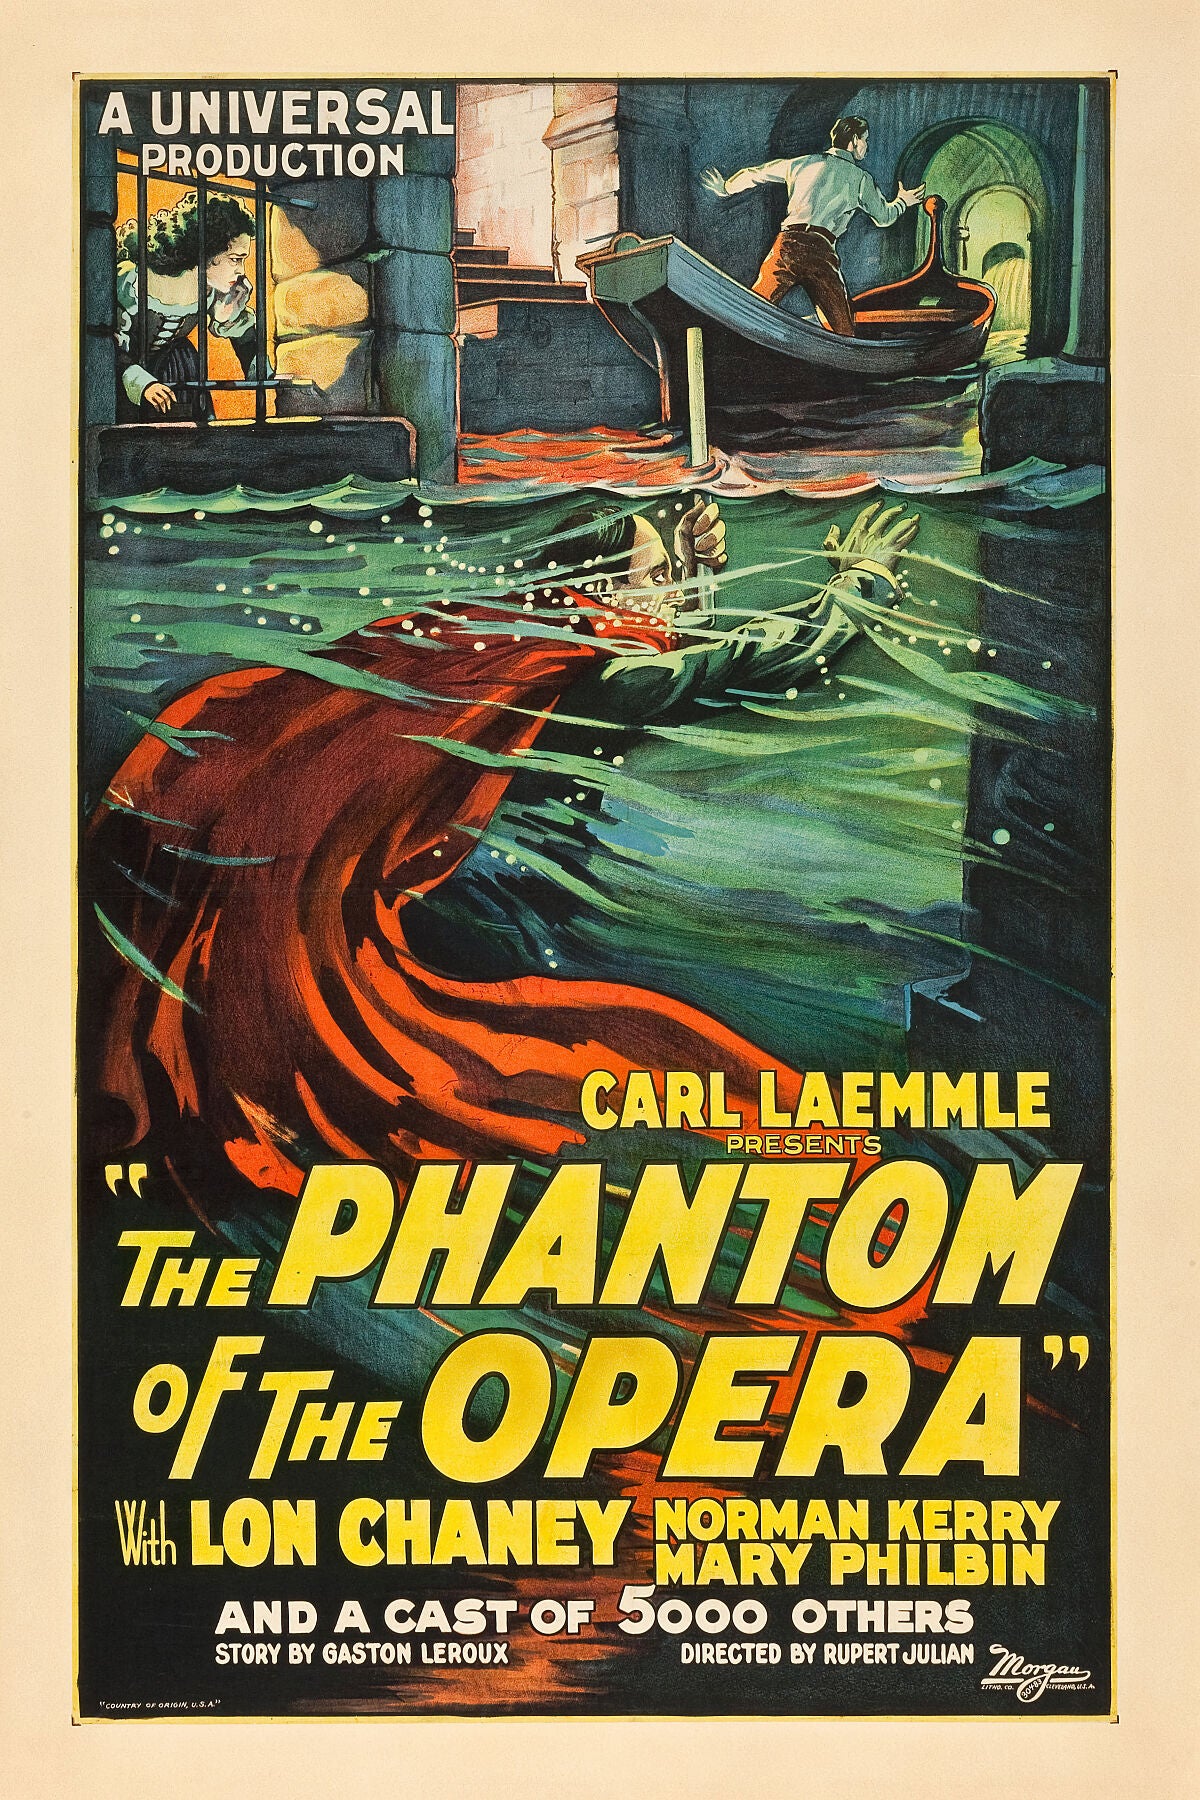 Poster advertising The Phantom of the Opera, 1925.